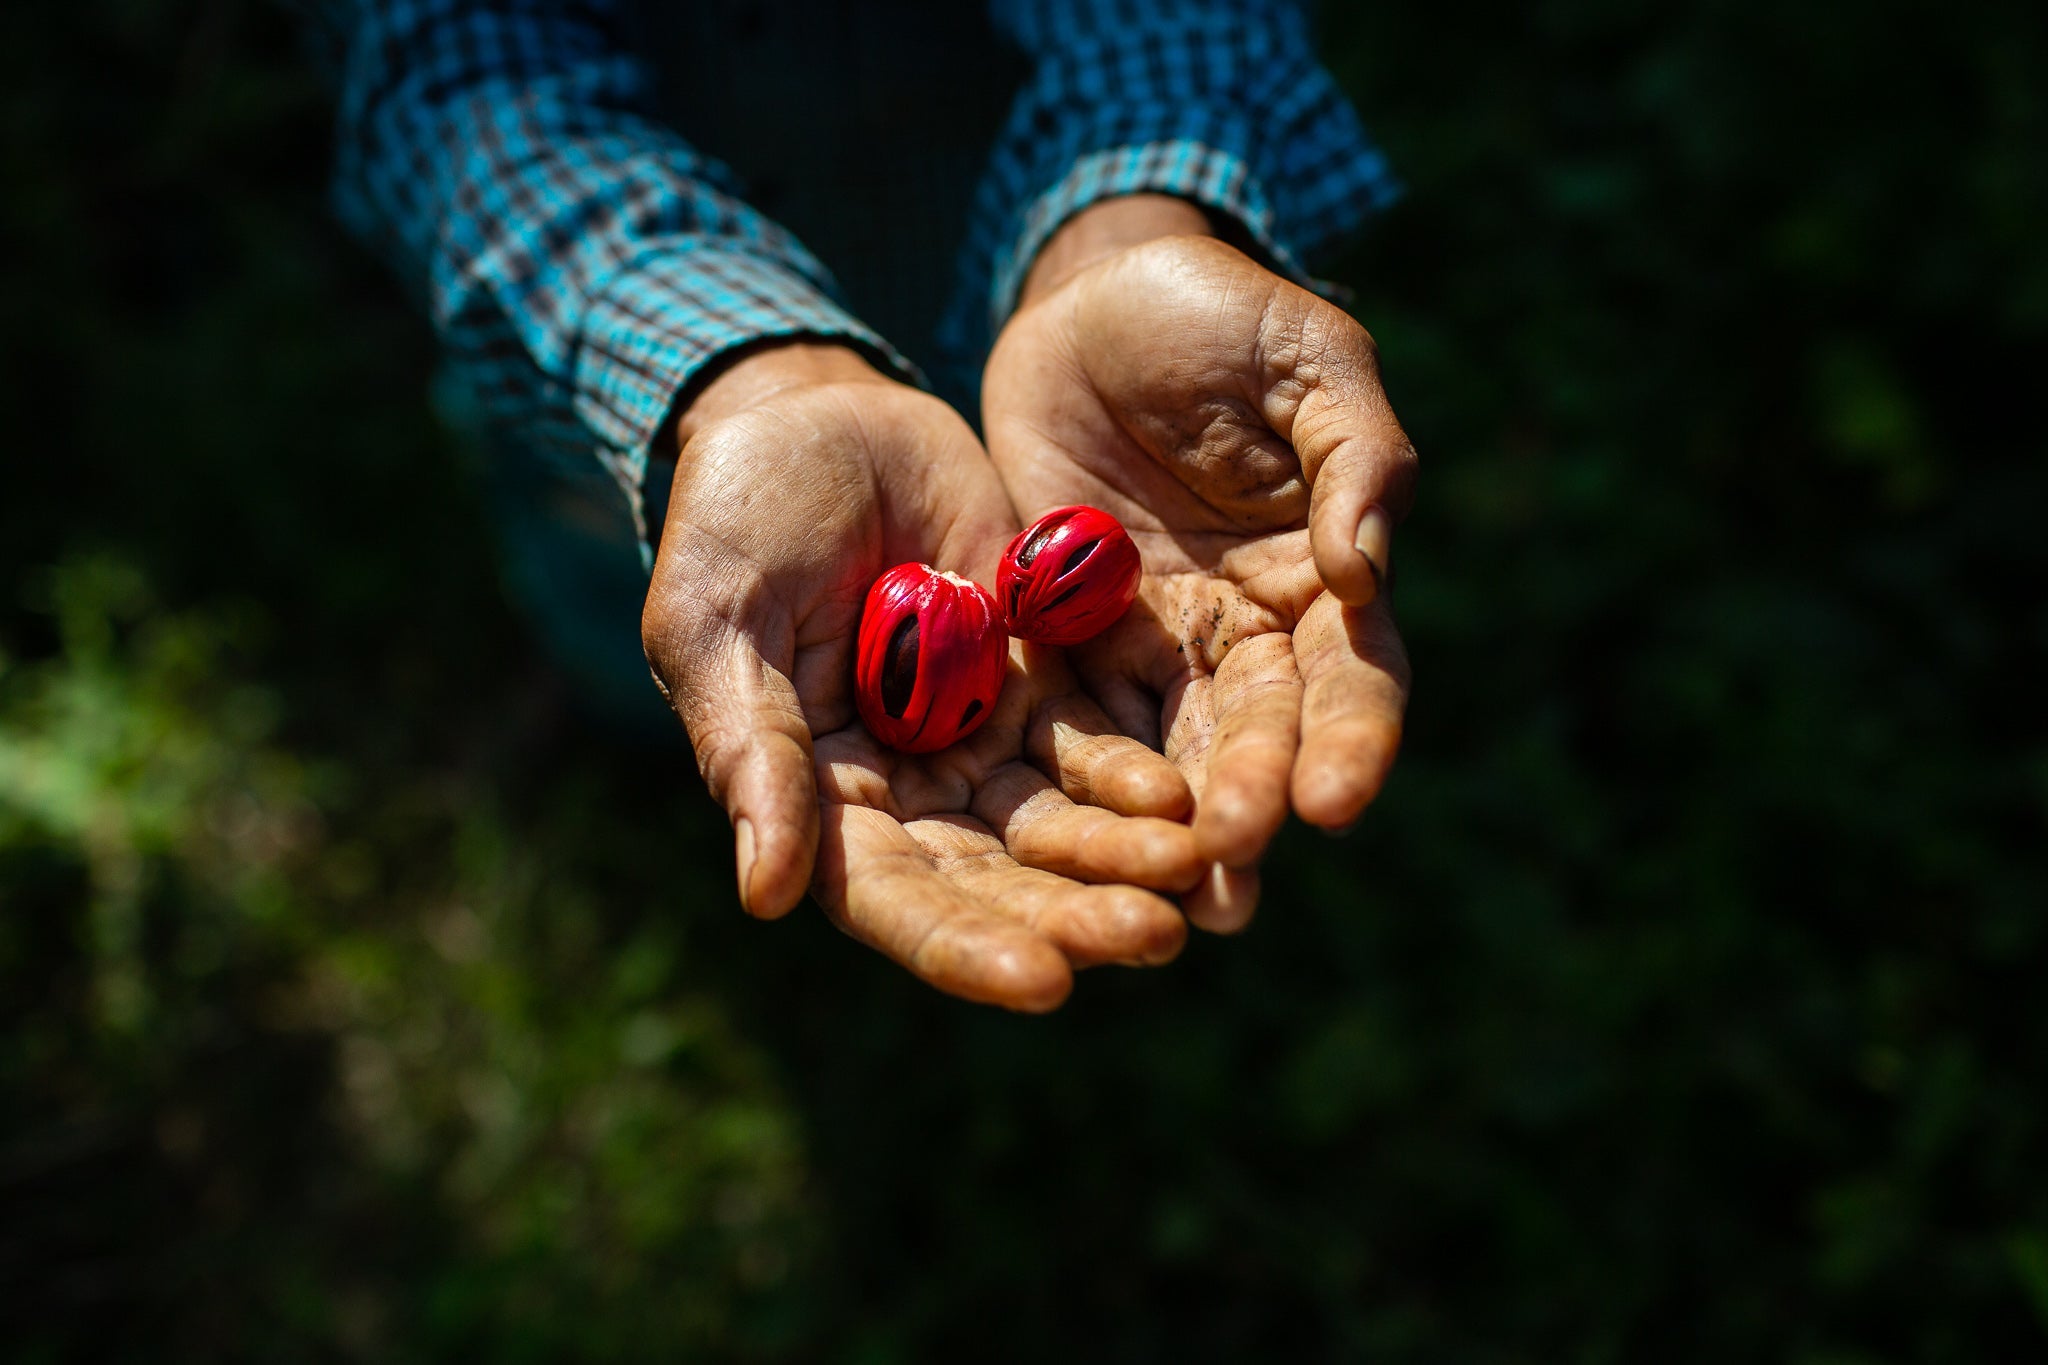 Hands holding two nutmeg-mace pods (bright reddish-pink mace wraps around dark inner nutmeg)